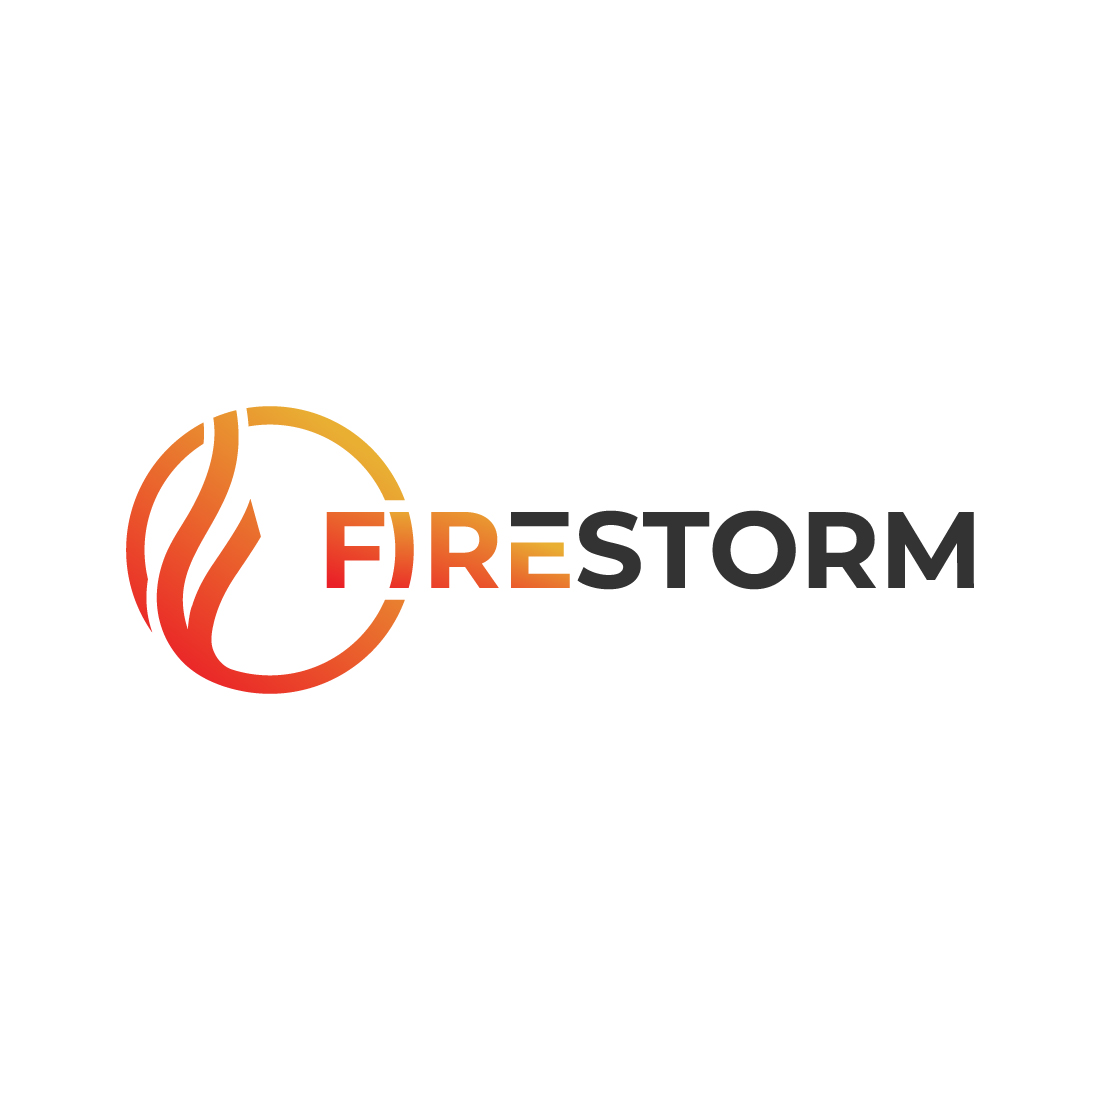 FireStorm Logo Design main cover